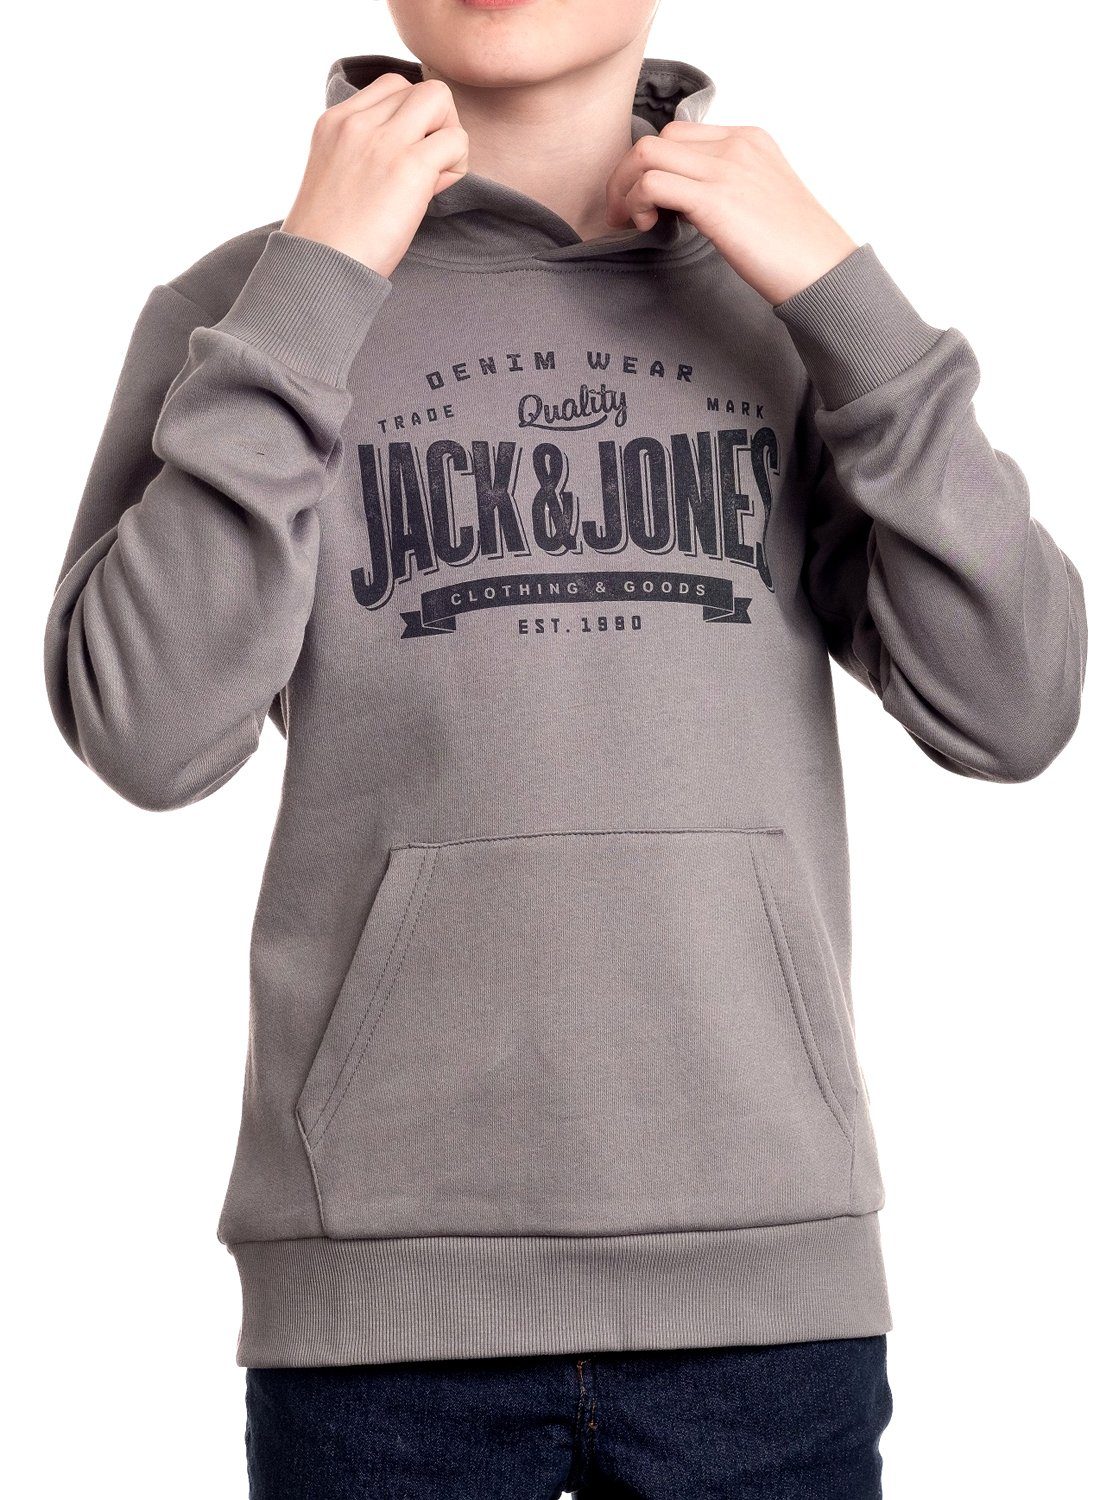 (Spar Jack mit 1 Doppelpack) & Junior Mix Pullover Jones Set, Printaufdruck Kapuzenpullover Doppelpack